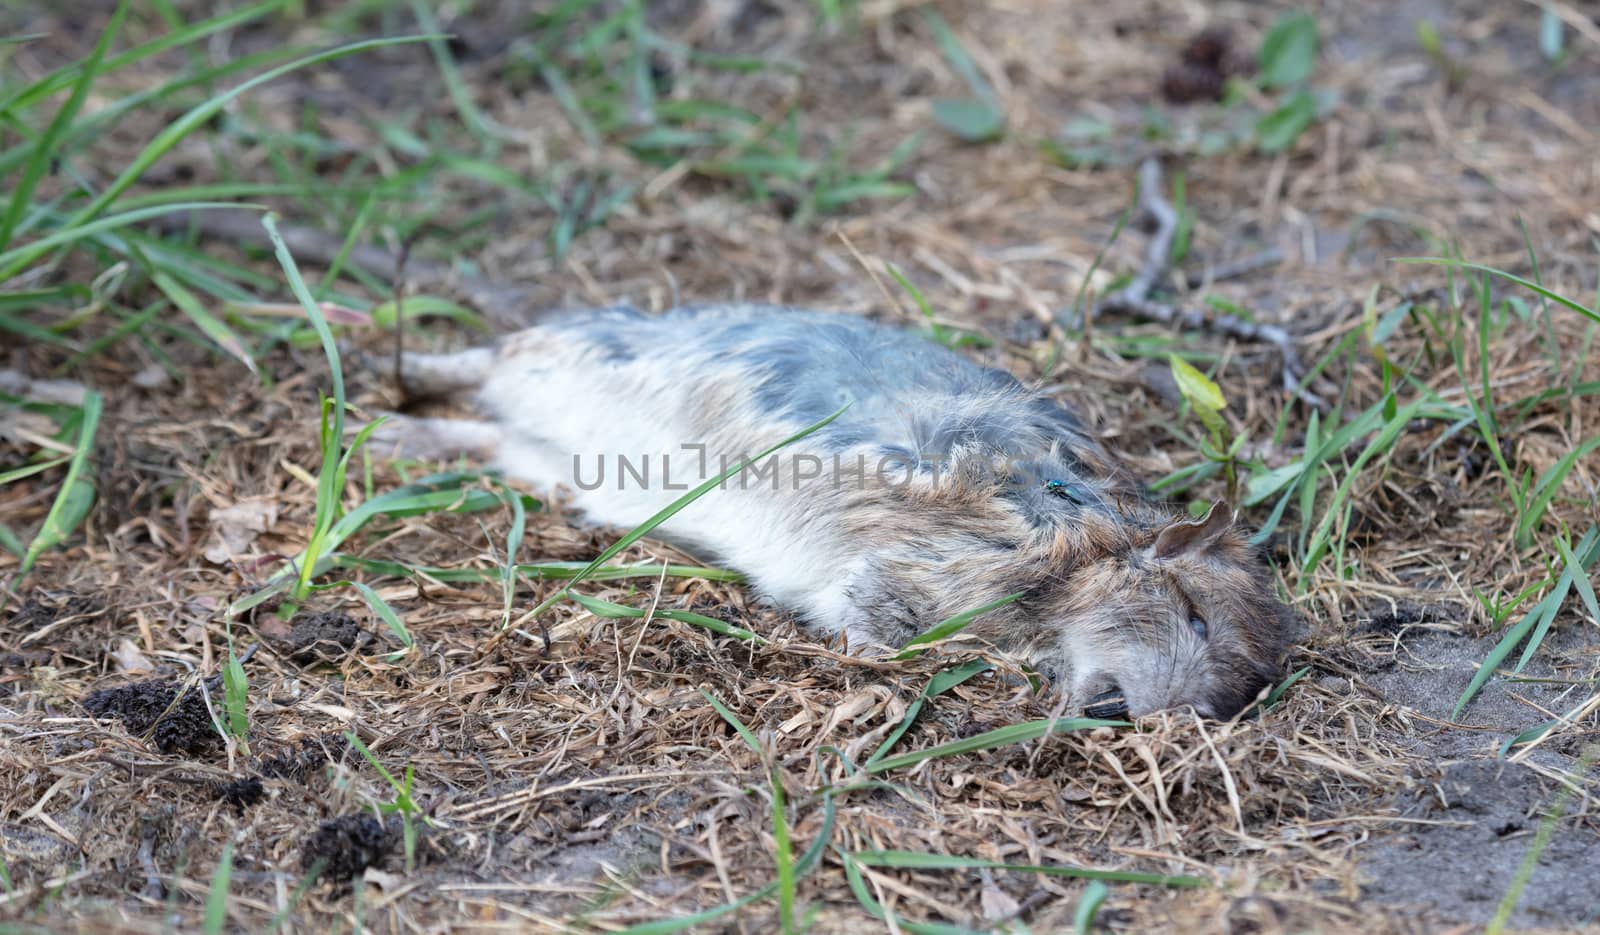 Dead muskrat lying in the grass by michaklootwijk